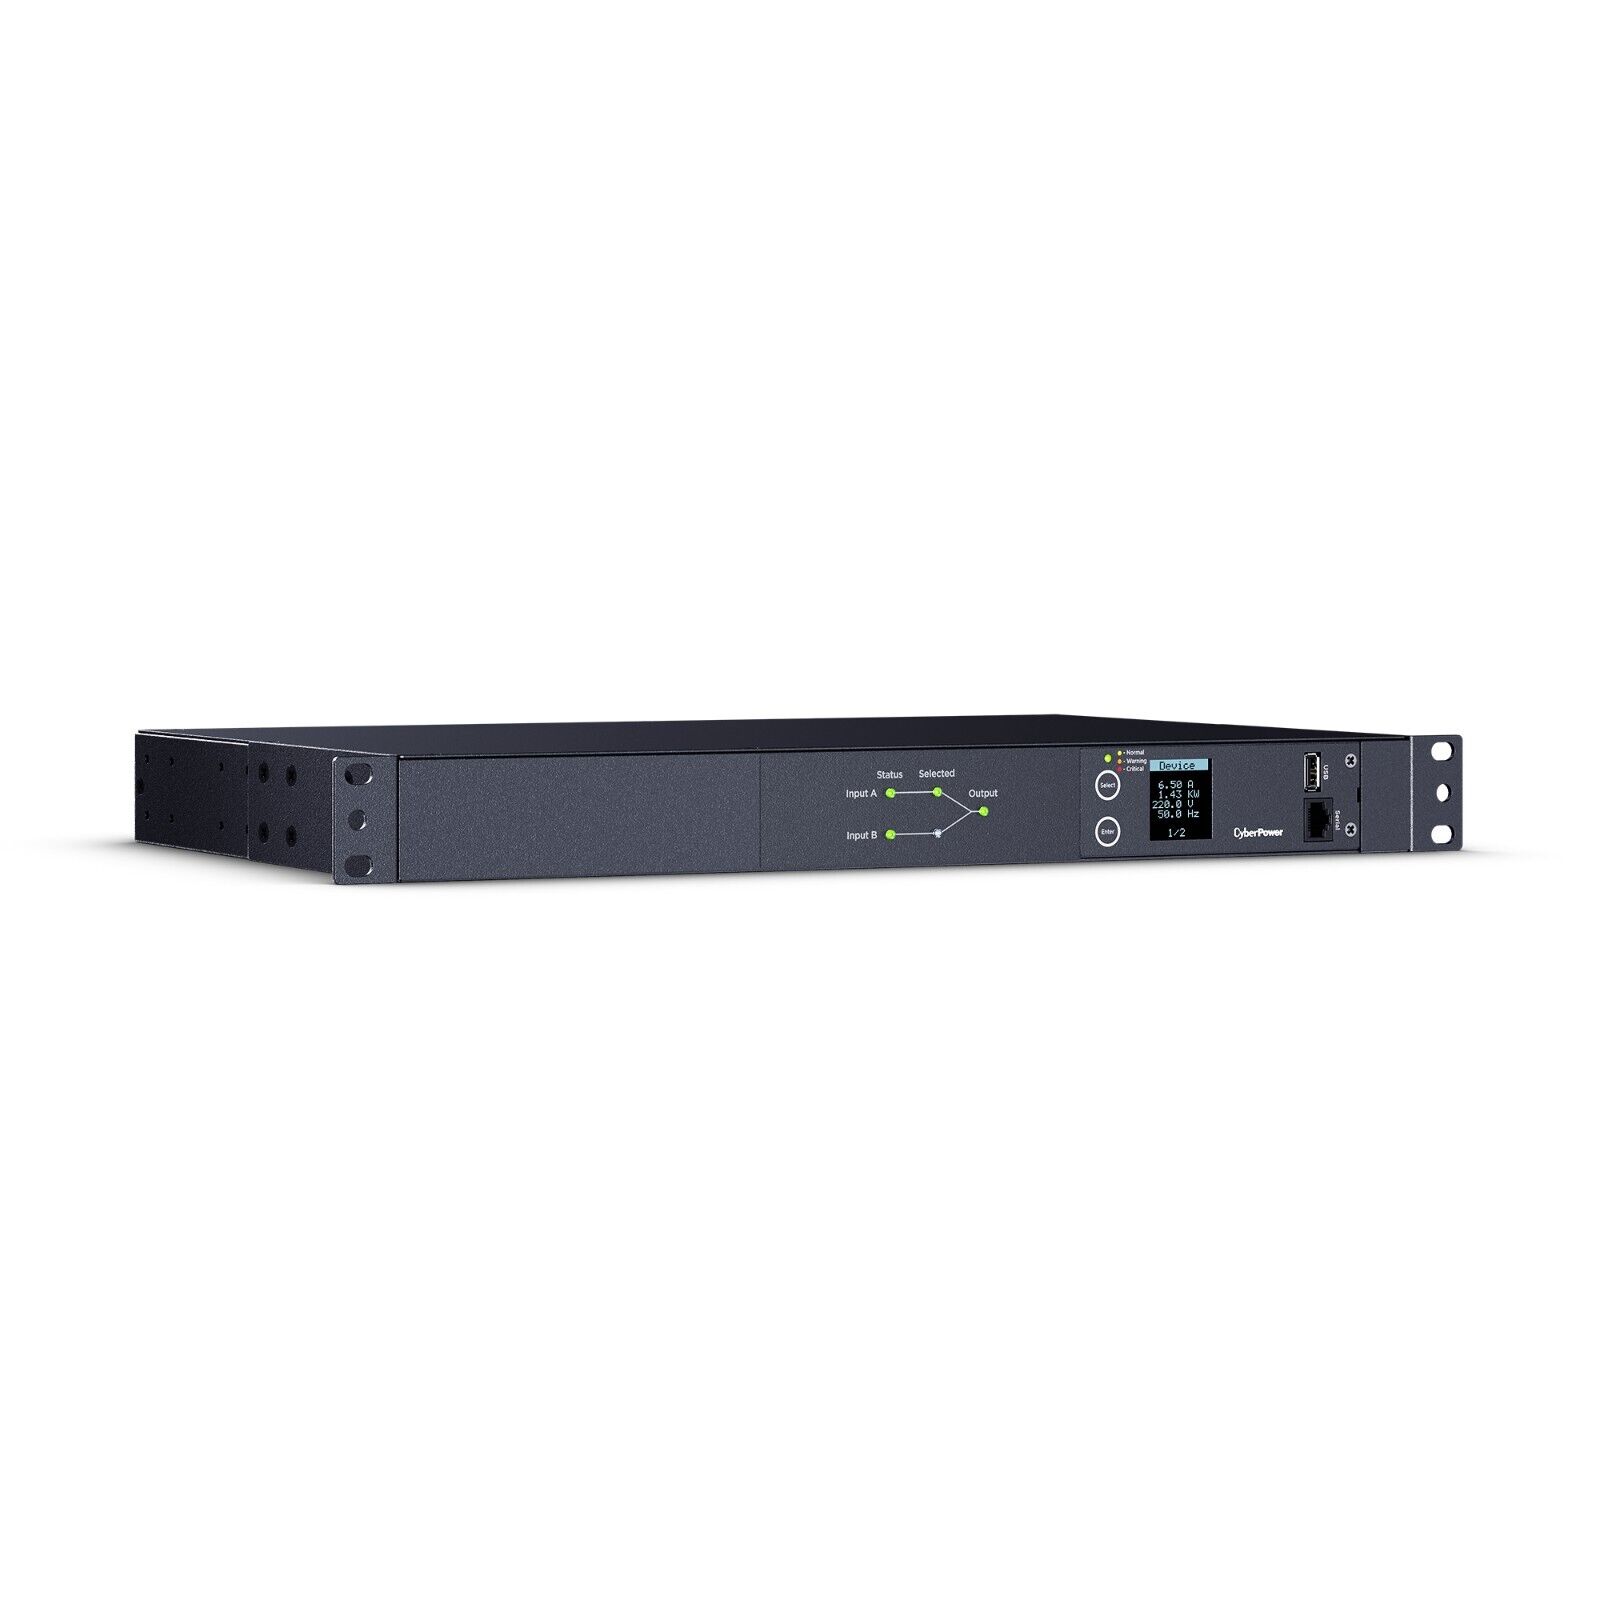 CyberPower Metered ATS PDU Series - PDU24004 - 200-240V - New In Box